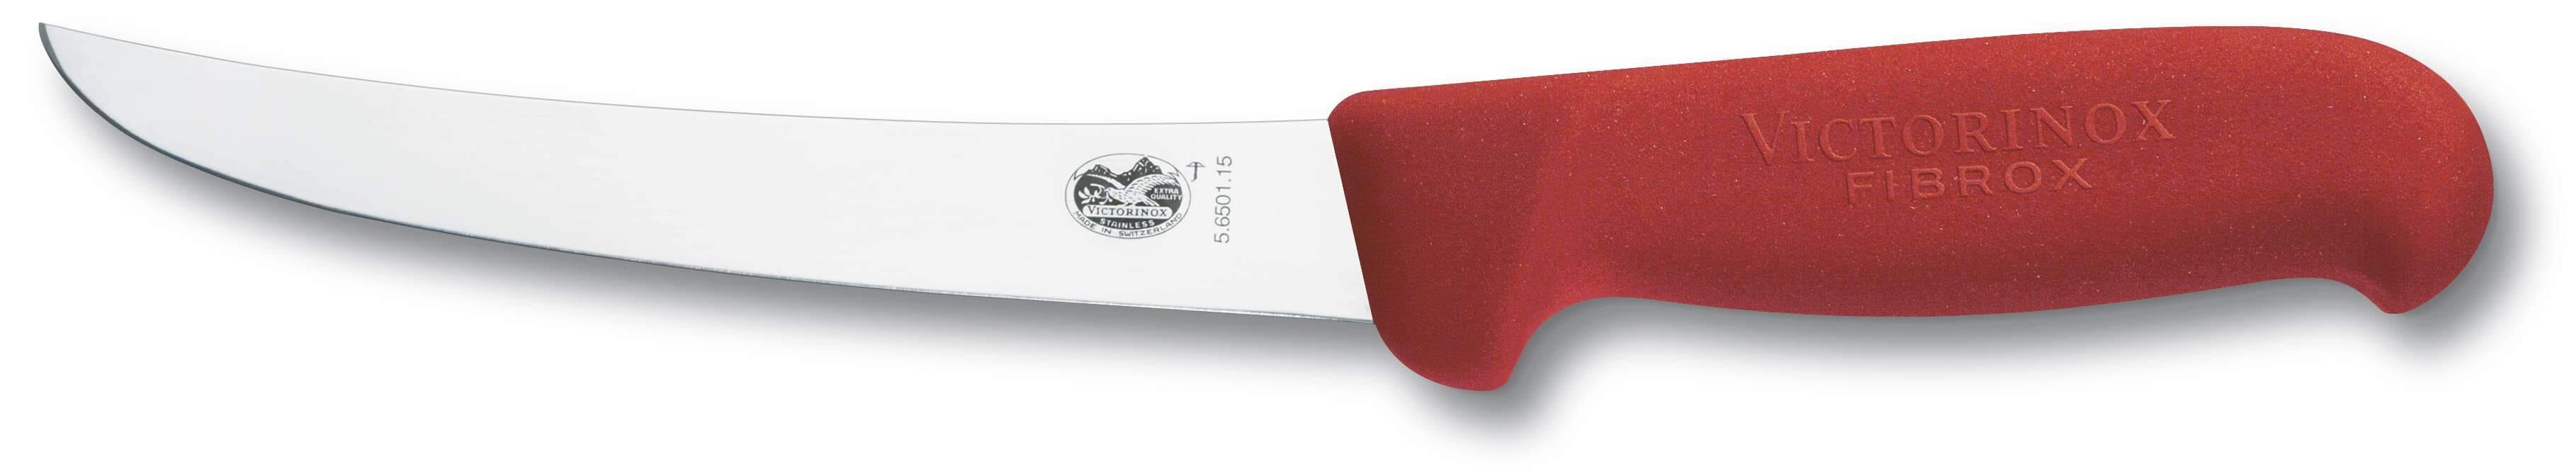 Victorinox Boning Knife 5.6501.15cm Curved Blade Red Handle